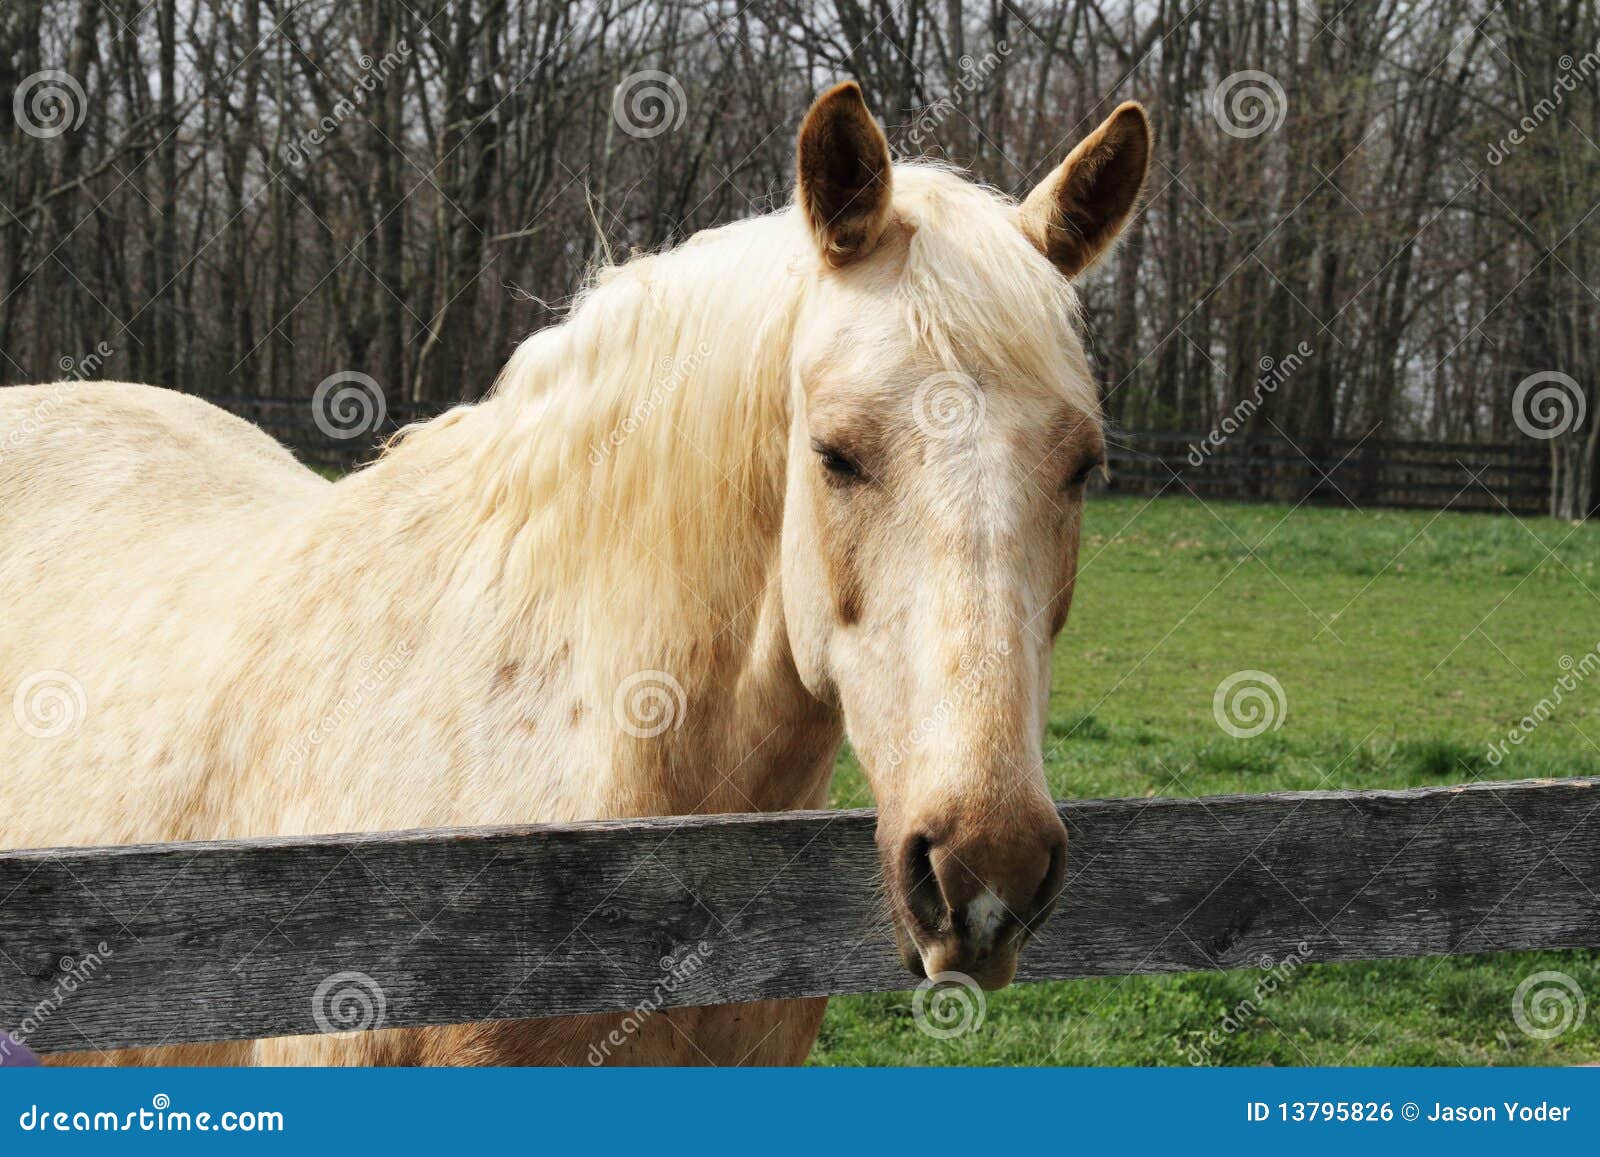 Blond Horse Breeds - wide 5